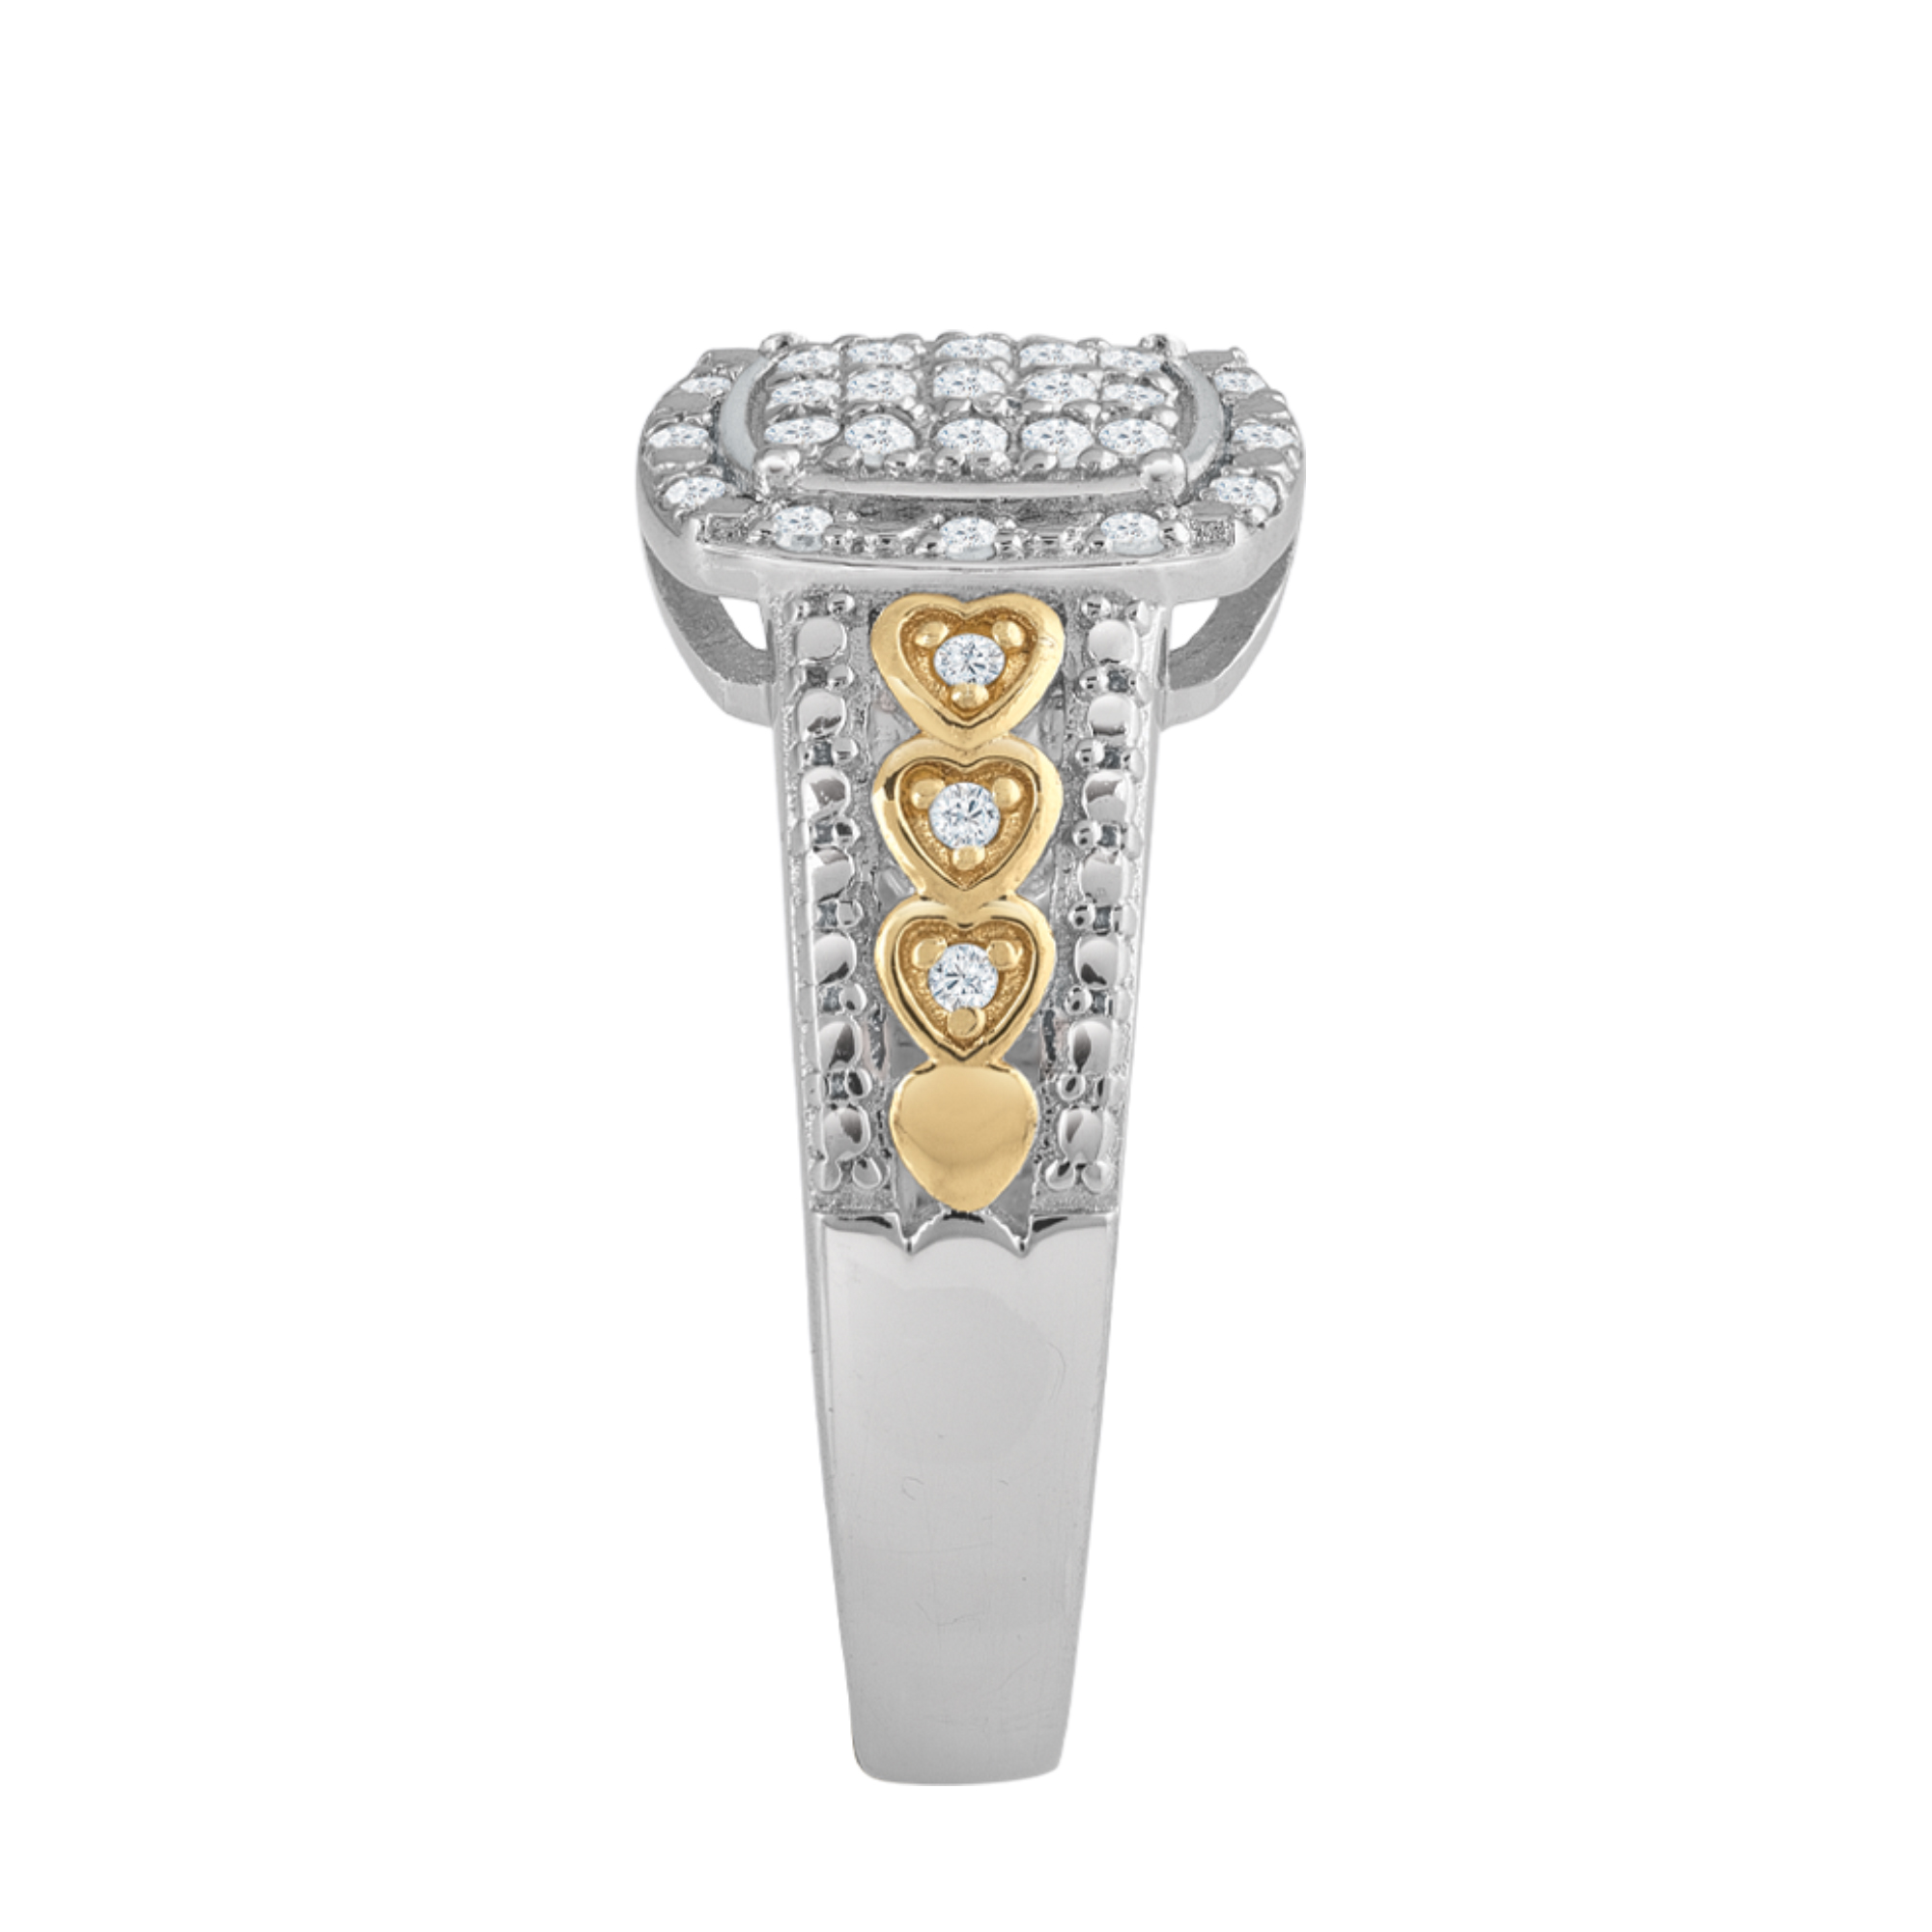 Promise Forever Diamond Ring 10465 0015 a main